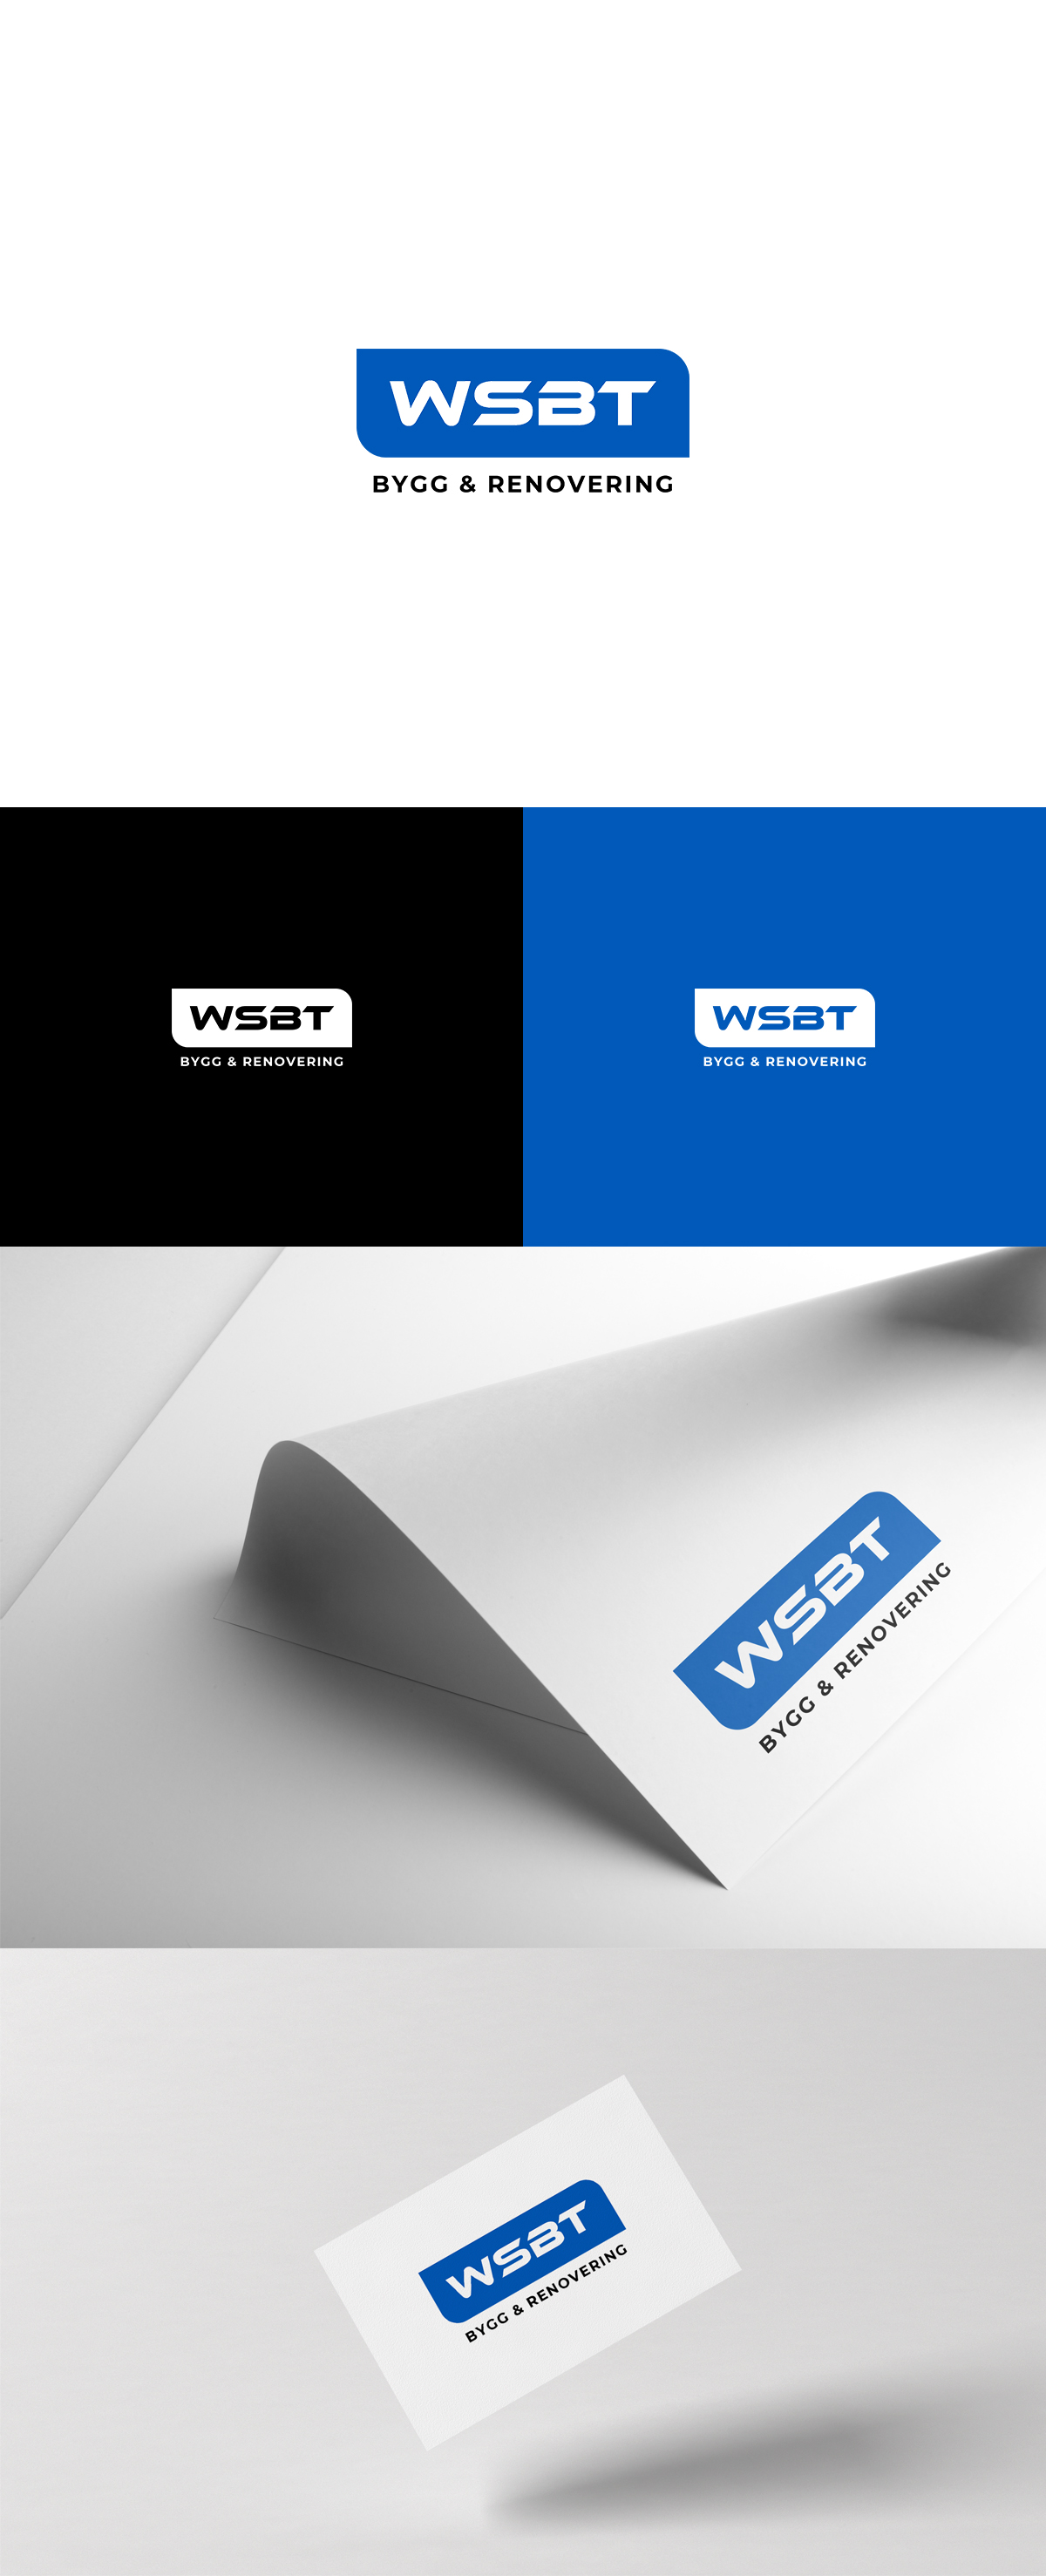 wsbt_logo.jpg